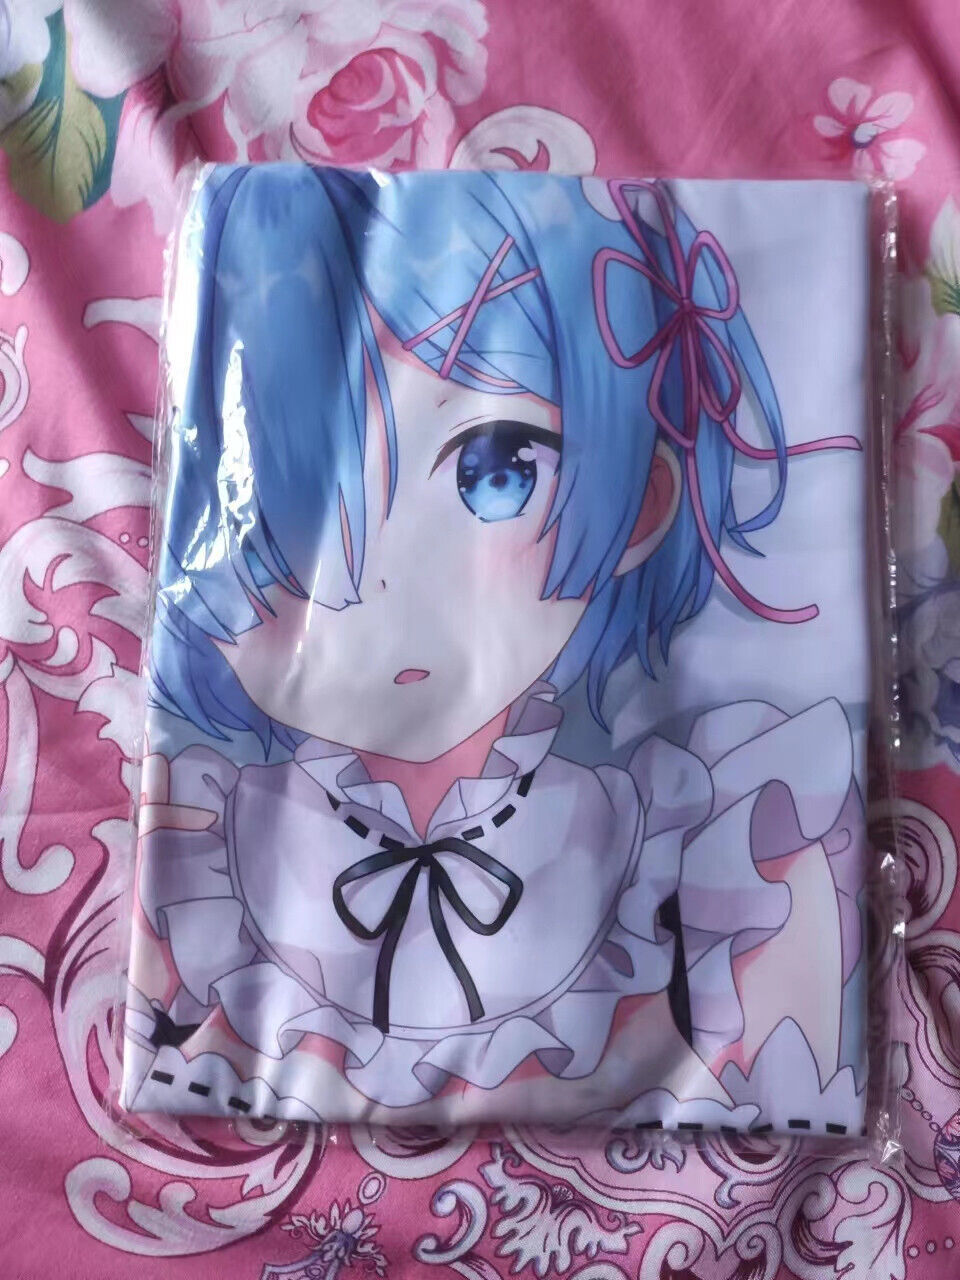 Adorable Re Zero REM Anime Hugging Body Pillow Cover Case Xmas Gift on eBay